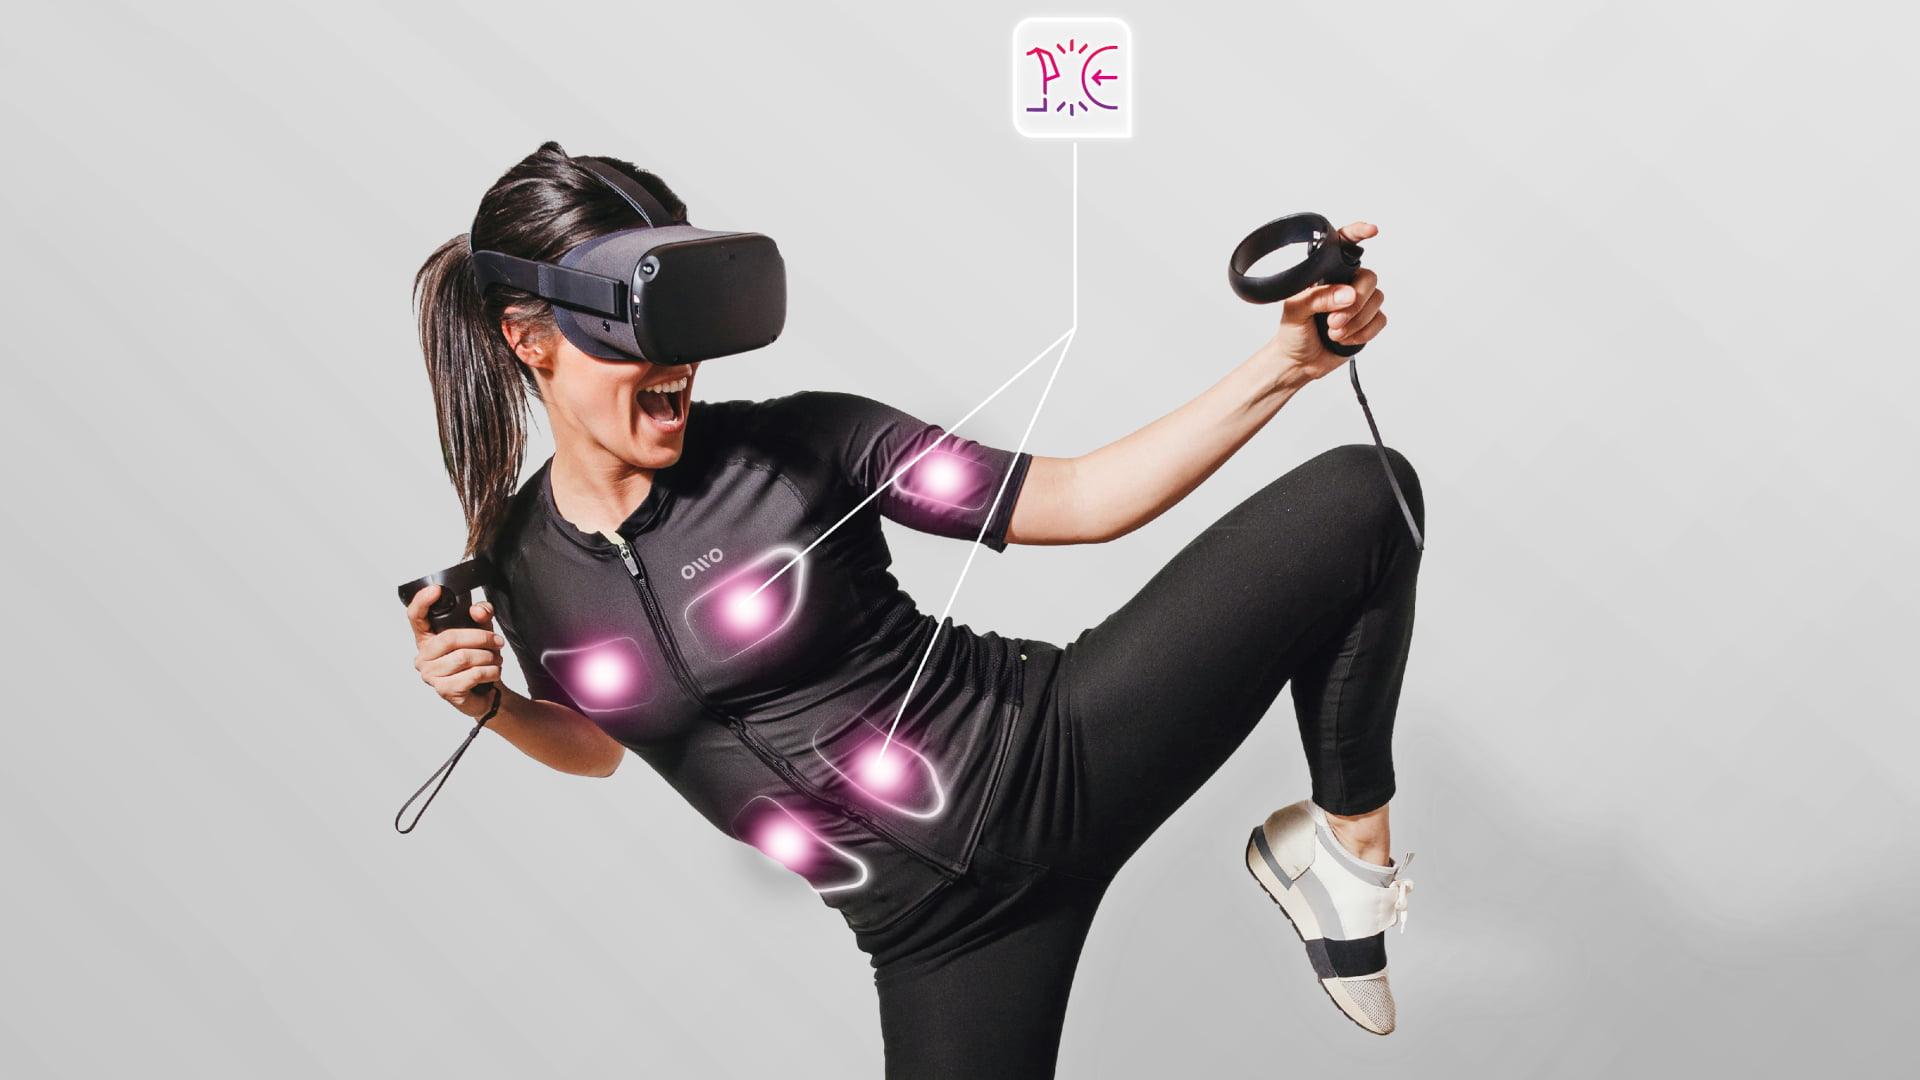 Posdata Sociable Extremadamente importante Electric haptic vest makes for shocking VR experiences